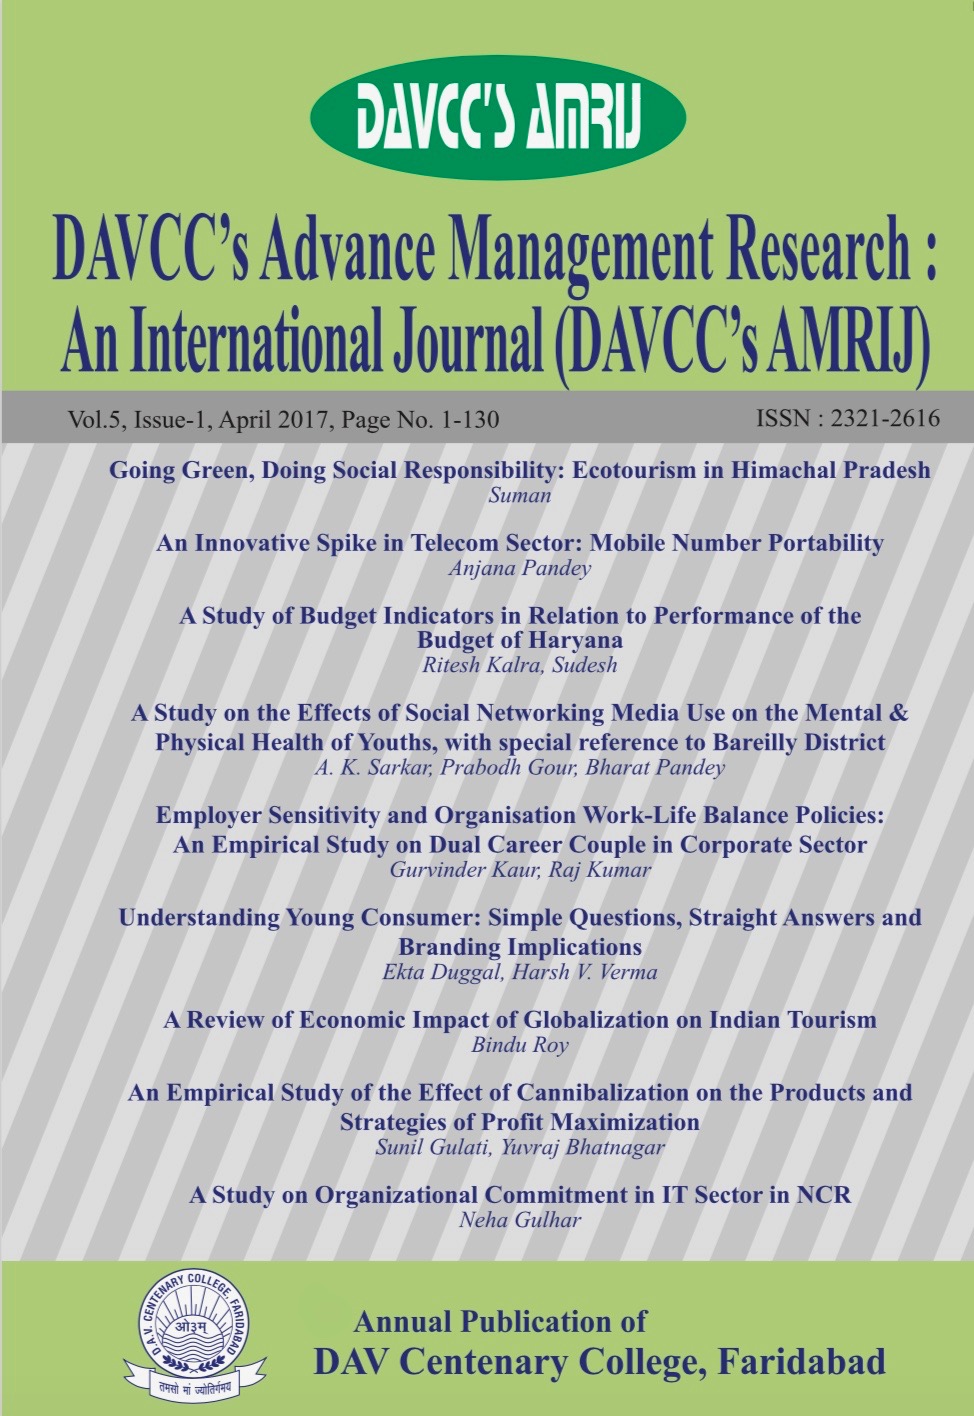 DAVCC's Advance Management Research